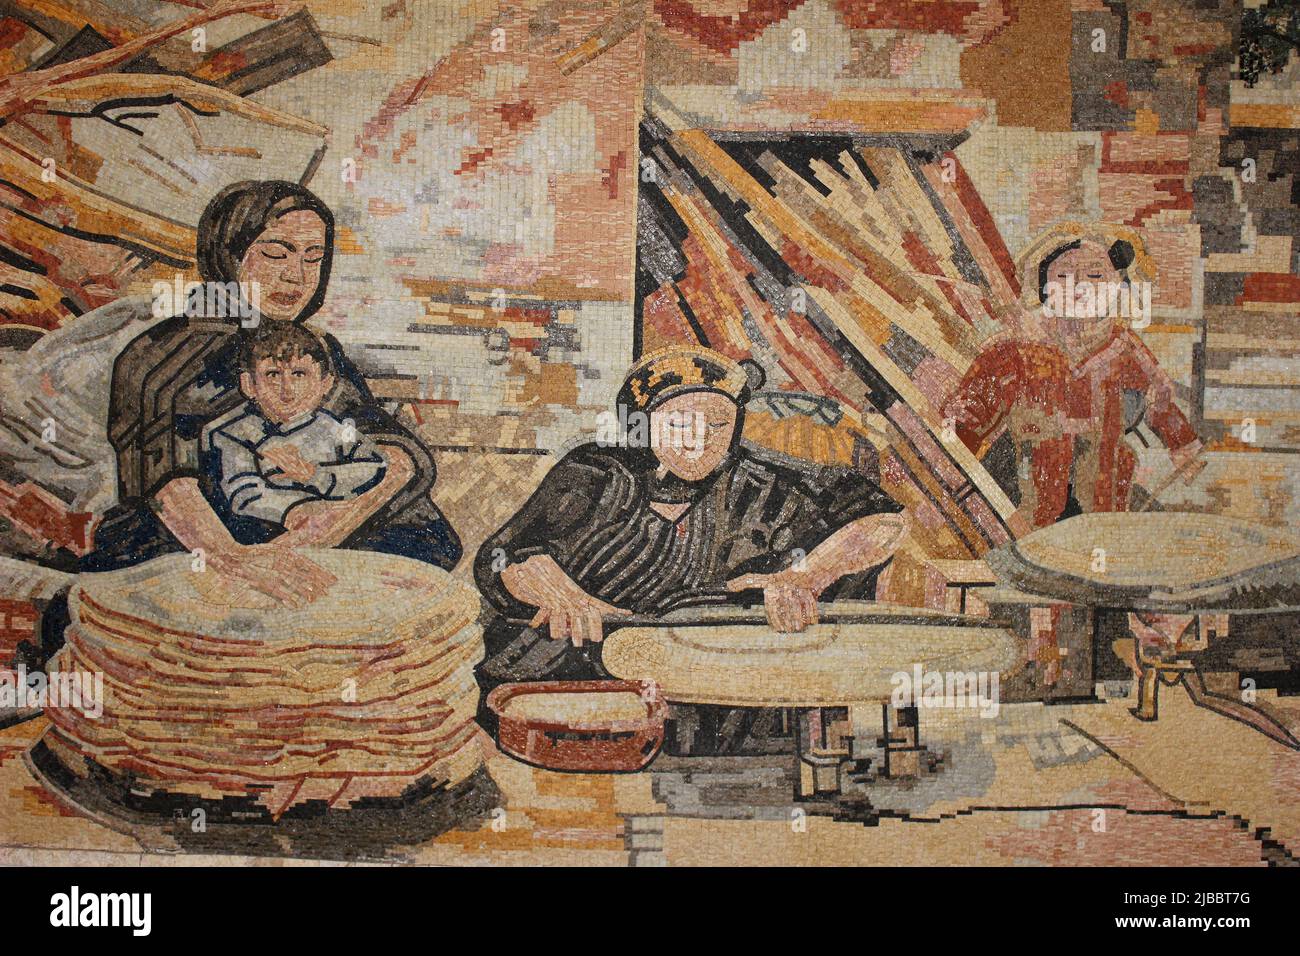 Jordanische Frauen bereiten Beduinenbrot vor - ein Fladenbrot namens Shrak - Mosaic Art Stockfoto